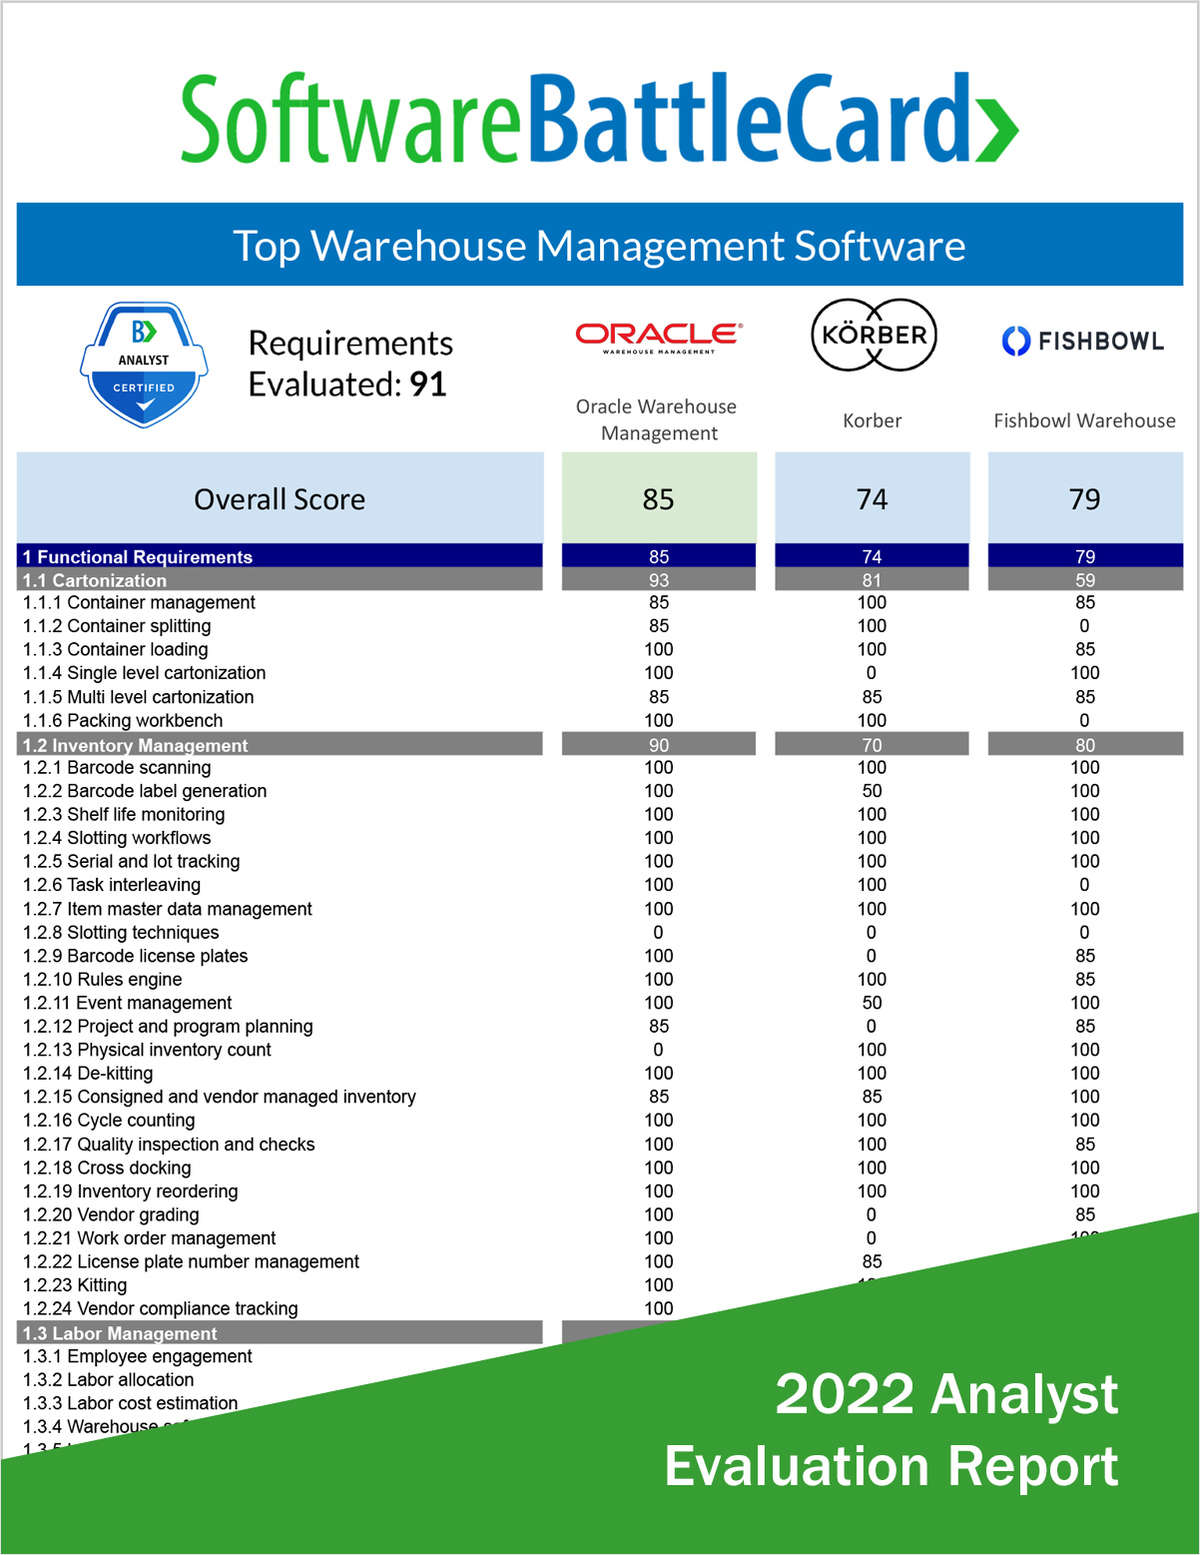 Top Warehouse Management Software BattleCard--Oracle WMS vs. Korber vs. Fishbowl Warehouse